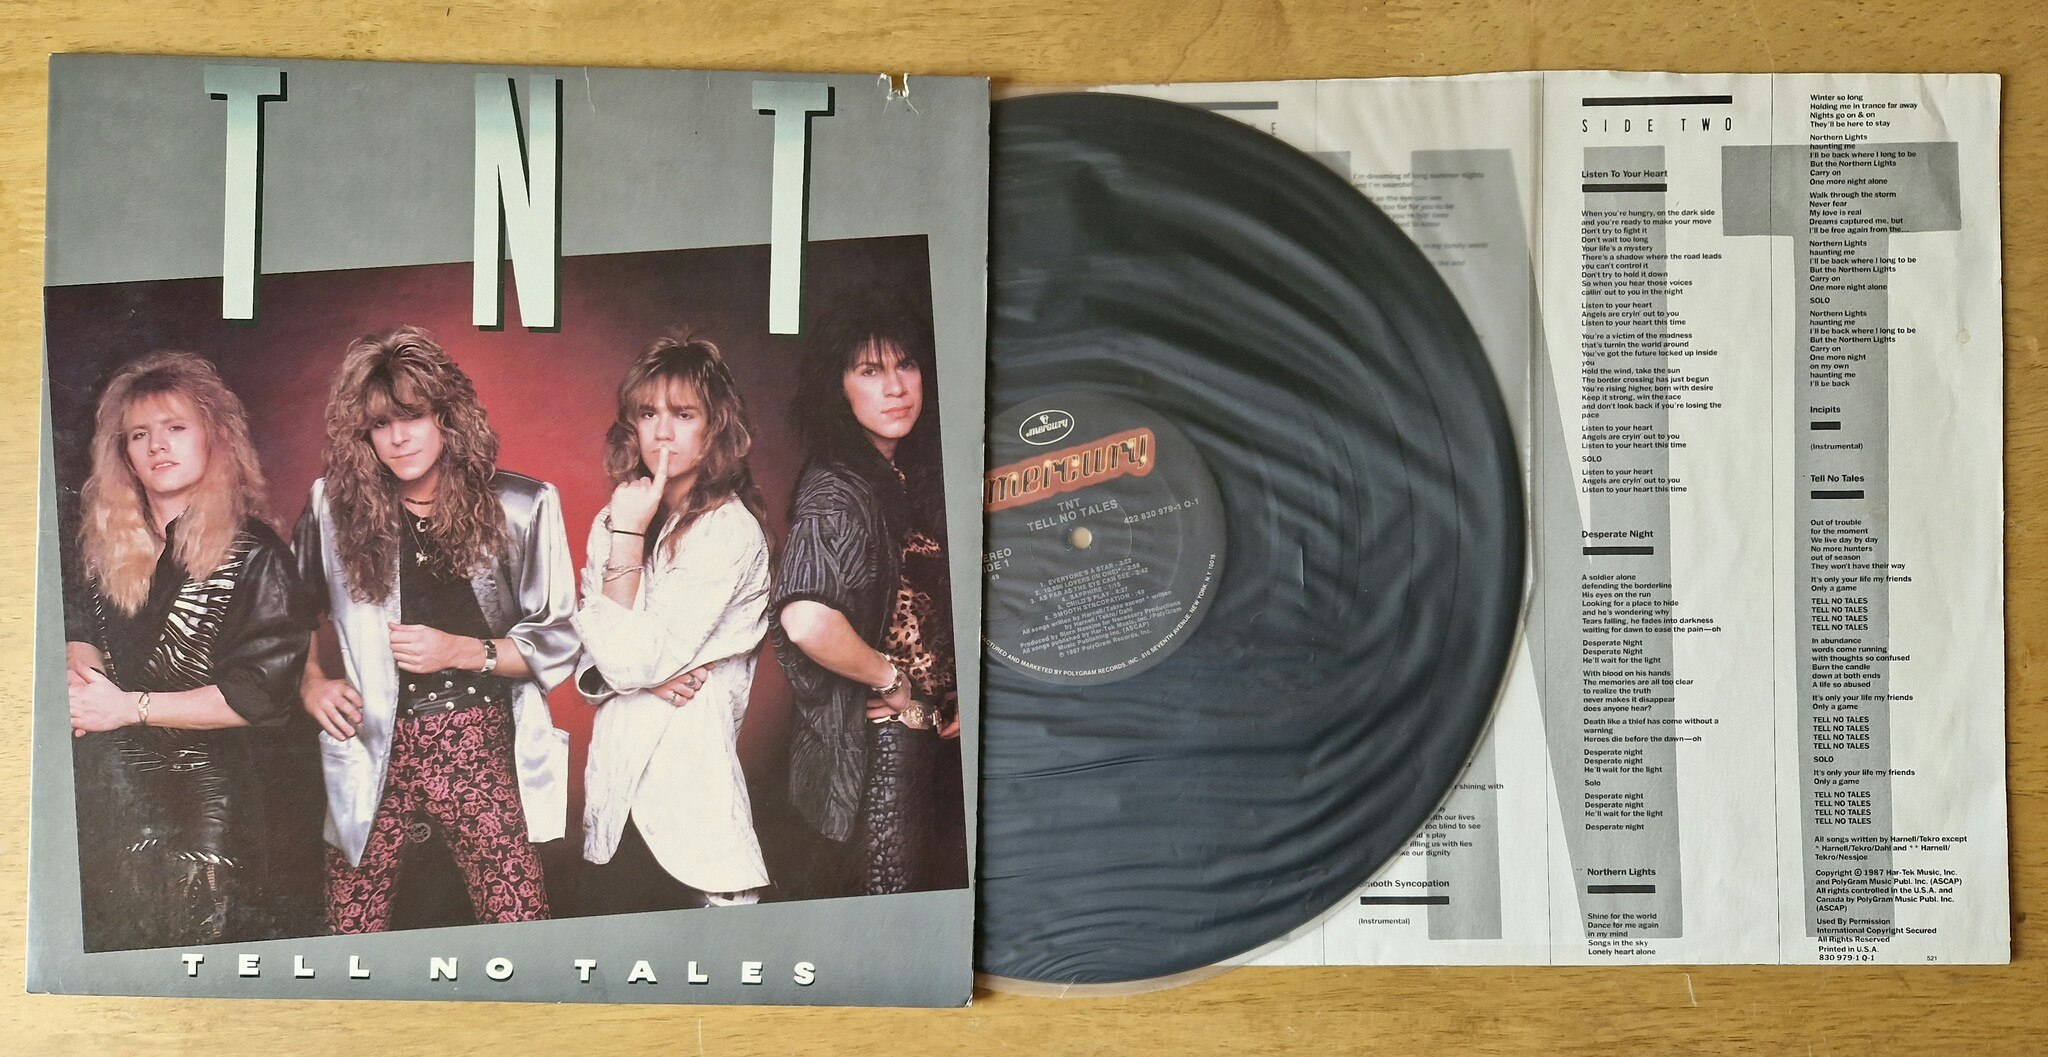 TNT, Tell no tales. Vinyl LP